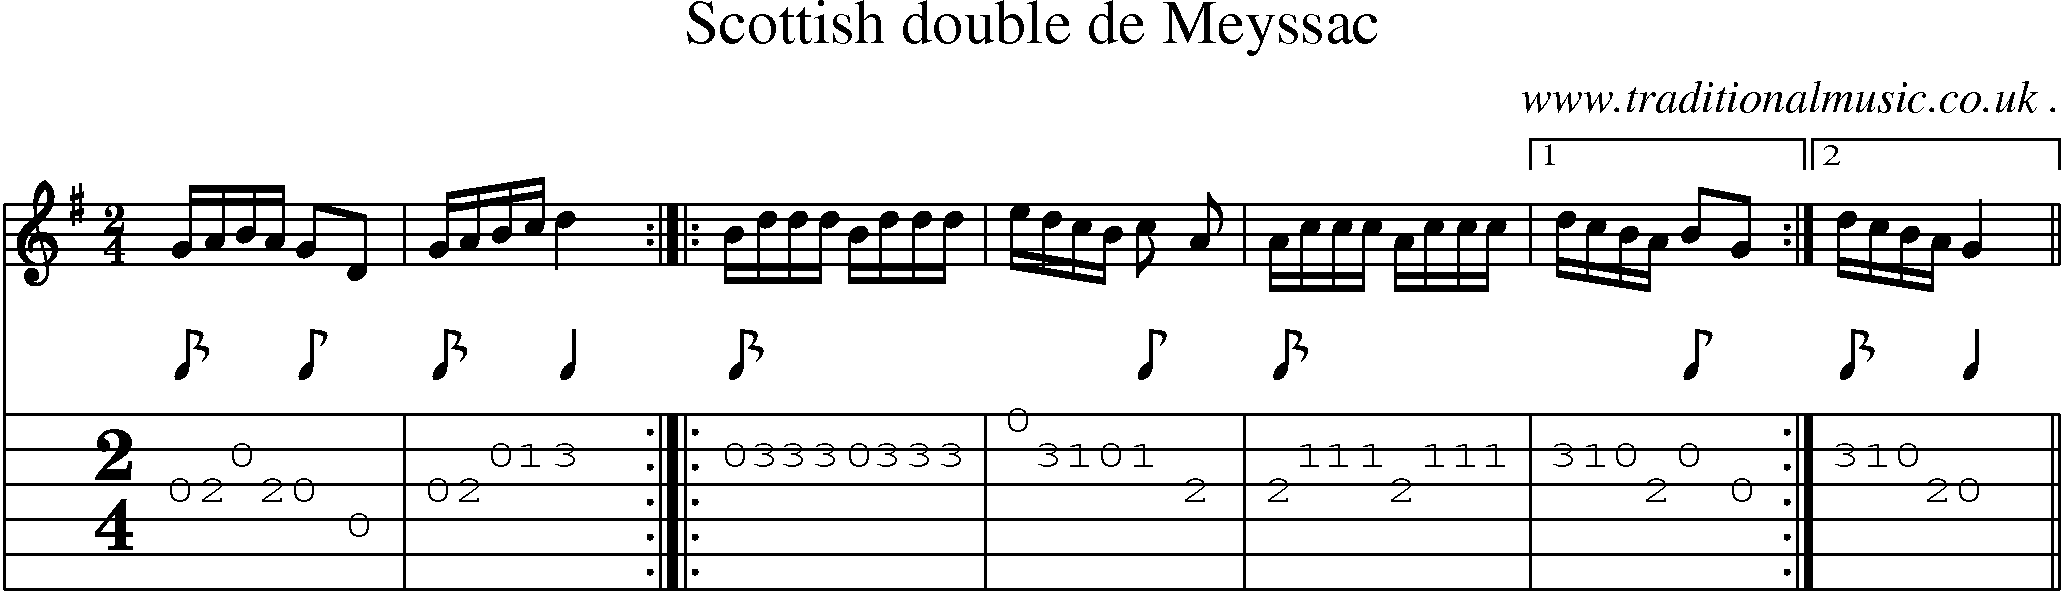 Sheet-Music and Guitar Tabs for Scottish Double De Meyssac